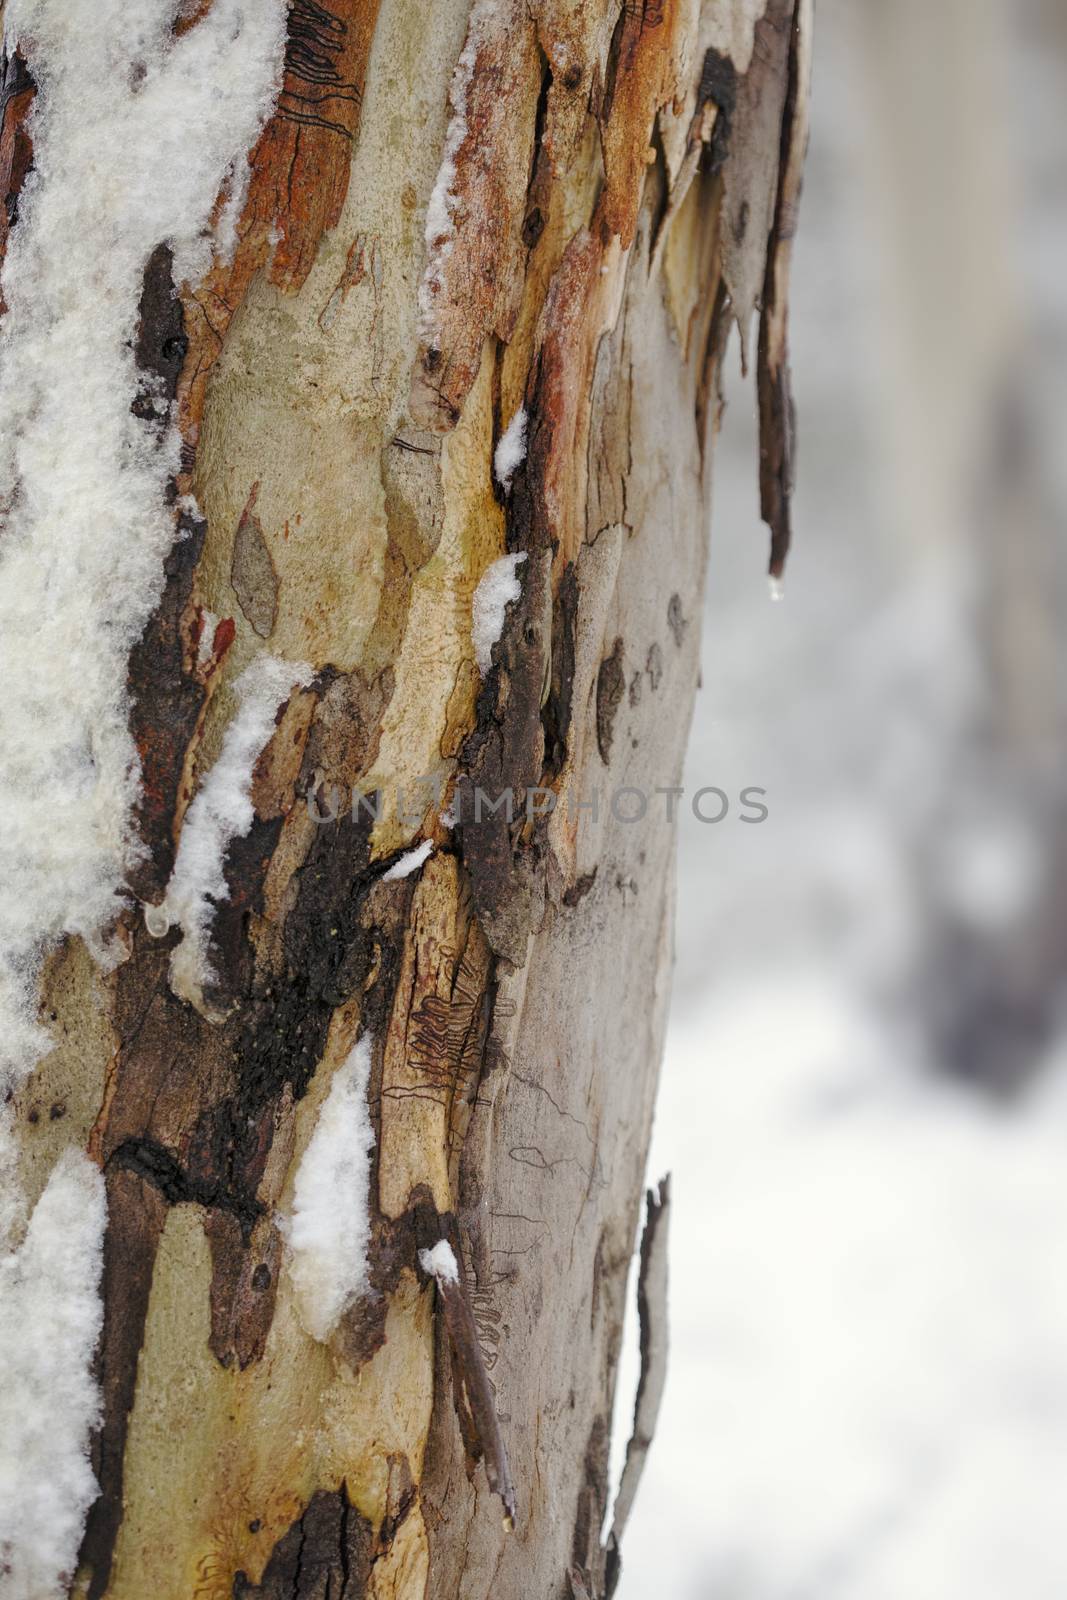 Colourful Australian gum tree bark in winter by lovleah